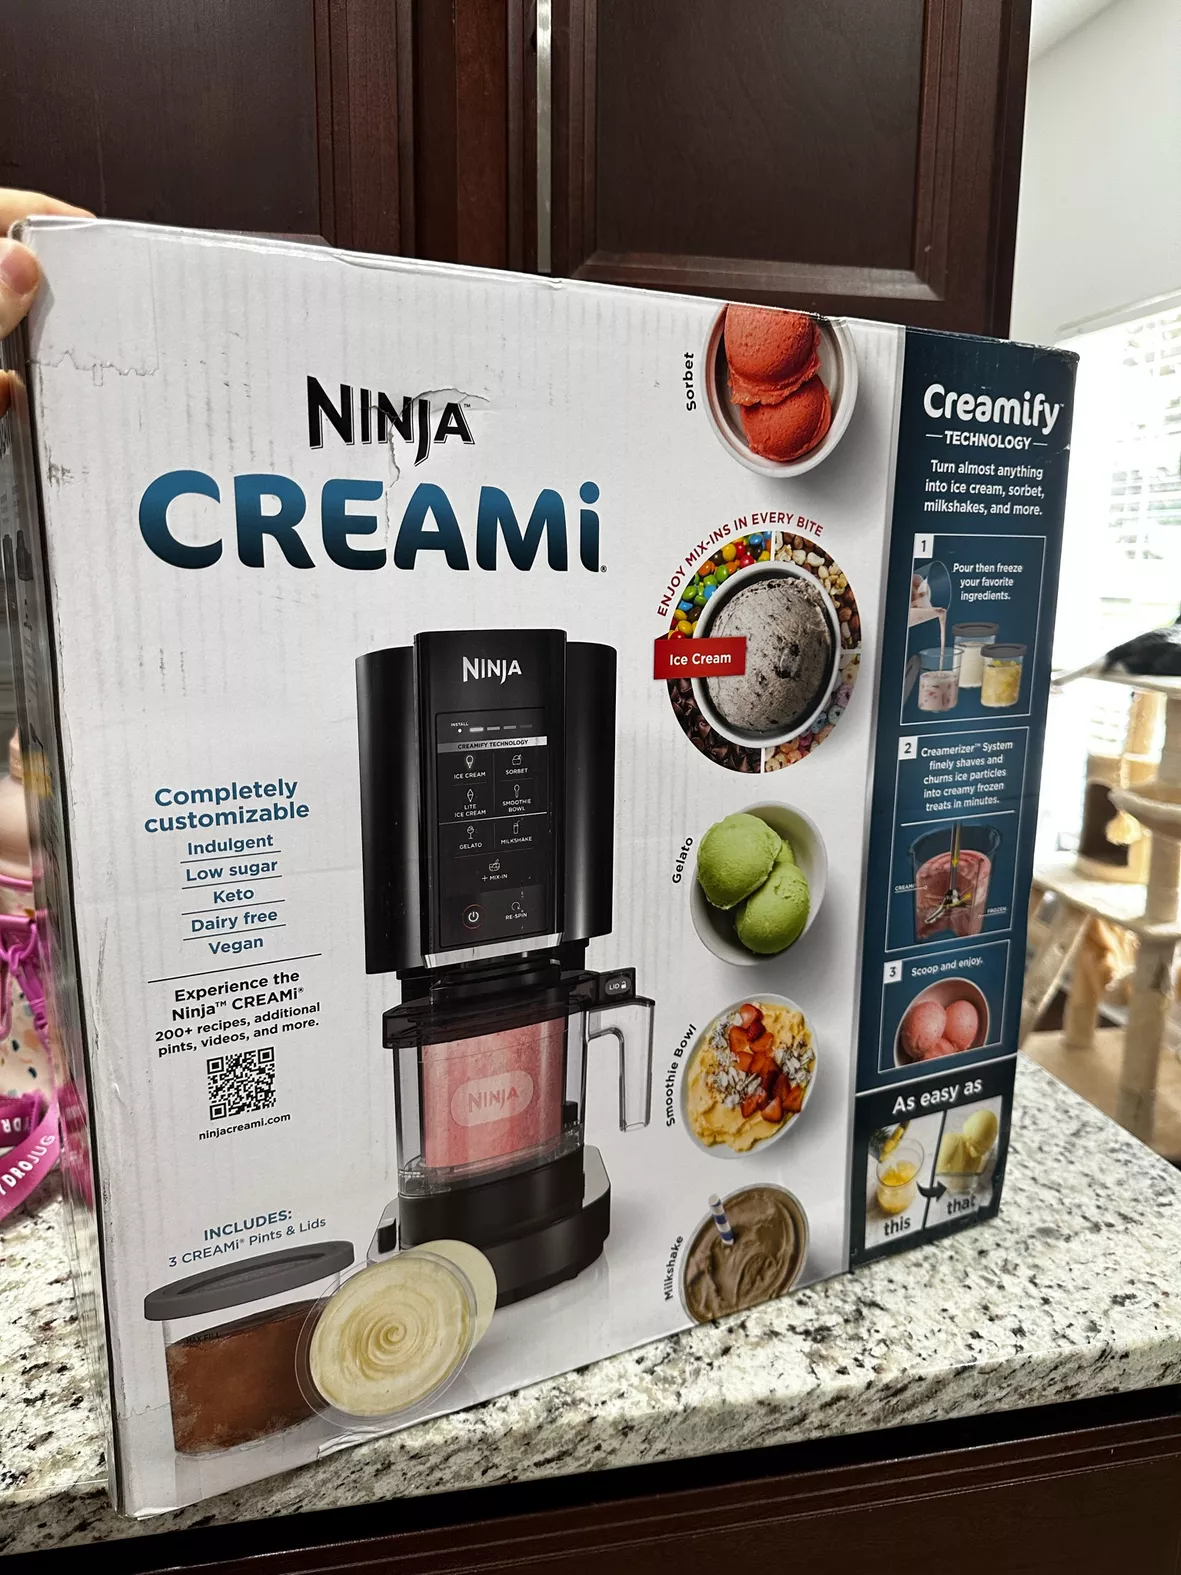  Ninja NC301 CREAMi Ice Cream Maker, for Gelato, Mix